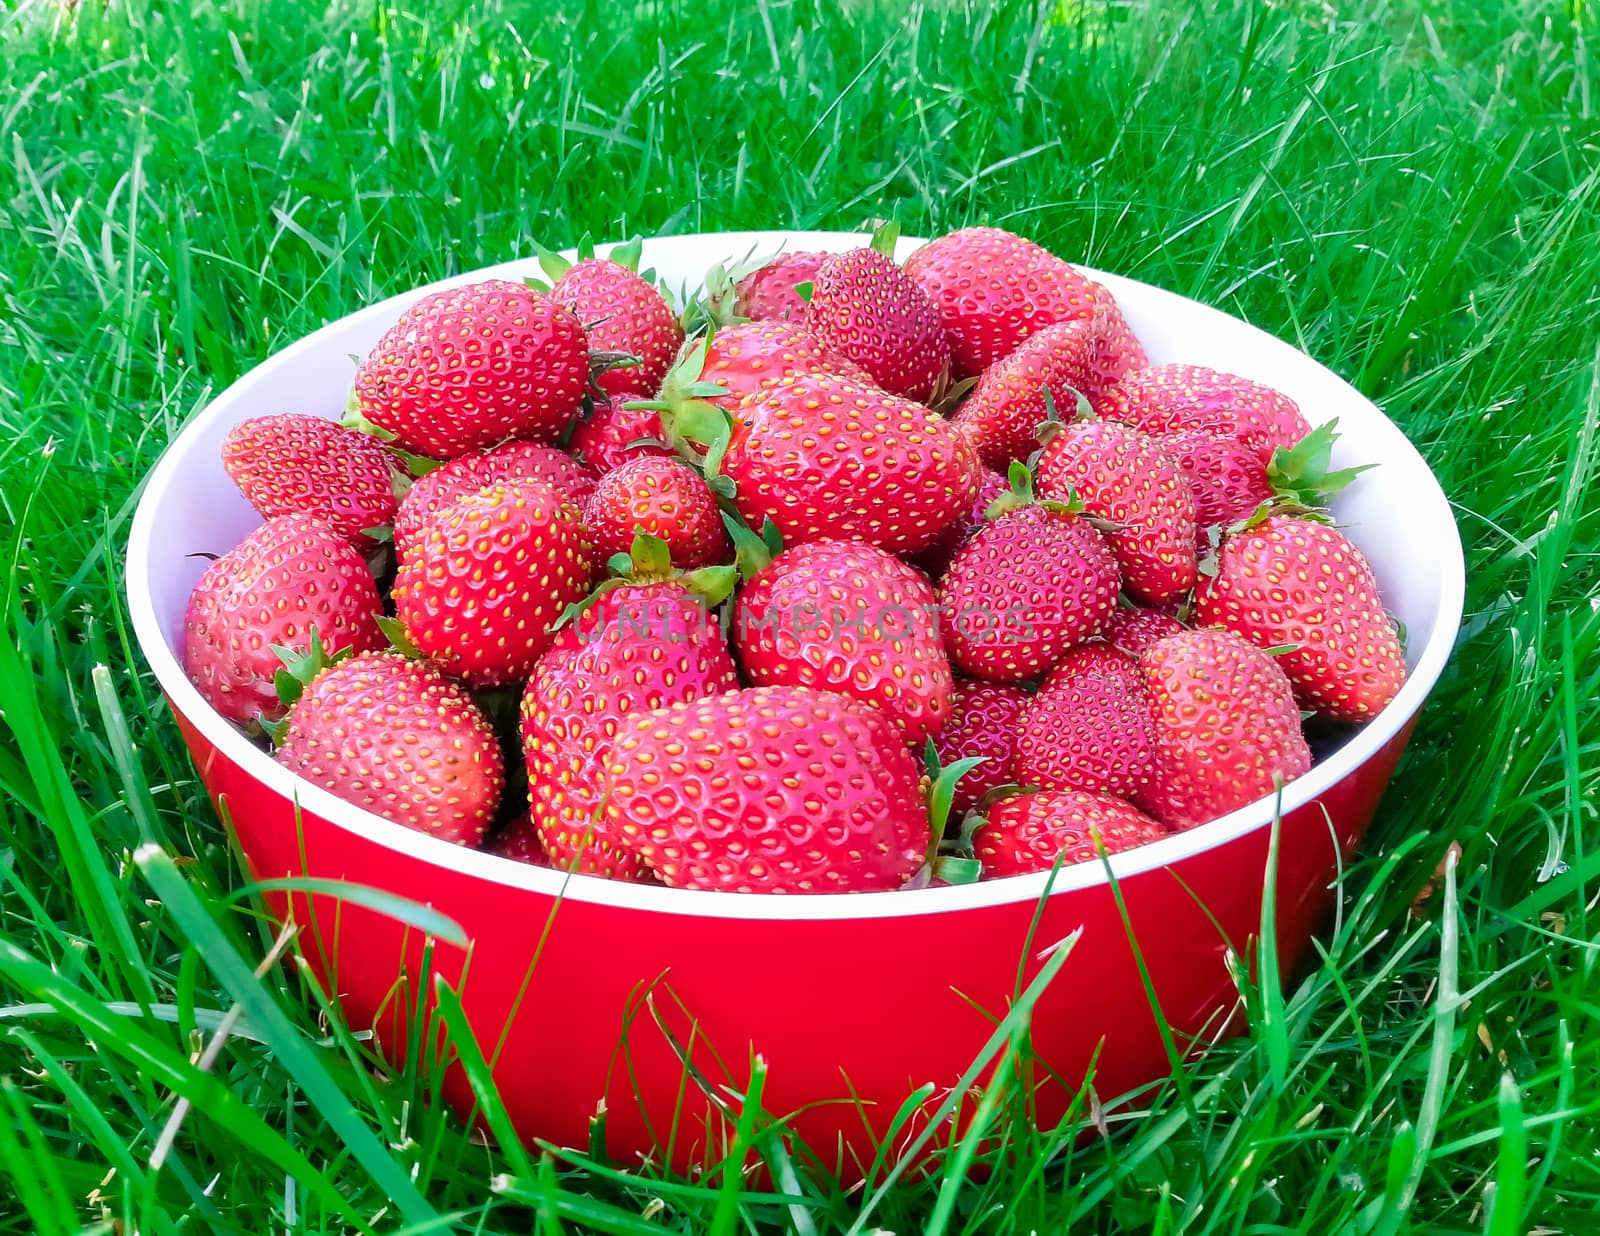 Strawberries on plate by zeffss